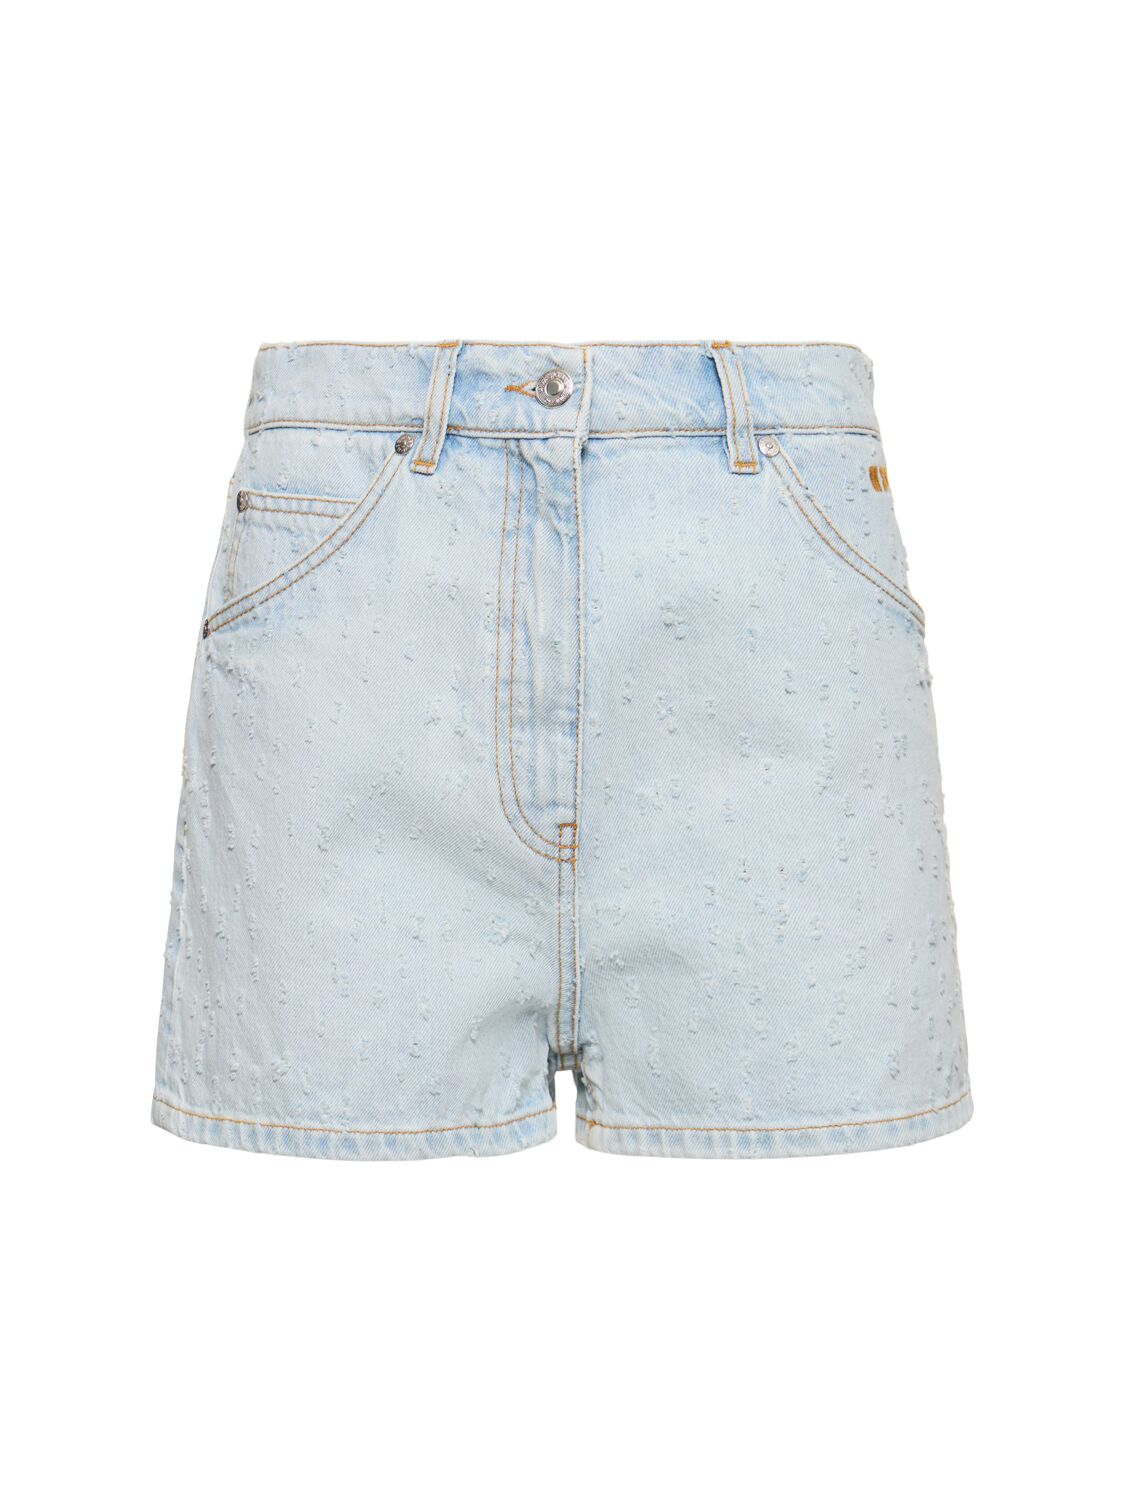 Image of Cotton Denim Shorts